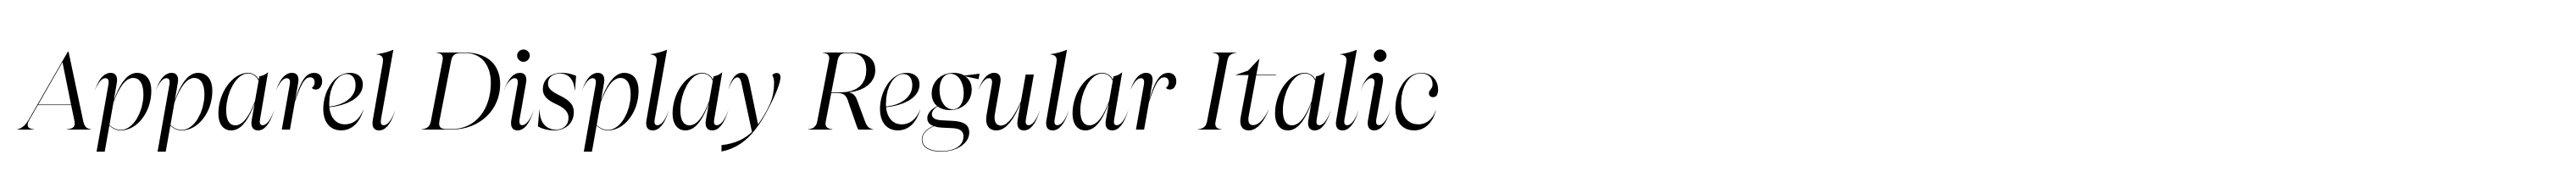 Apparel Display Regular Italic